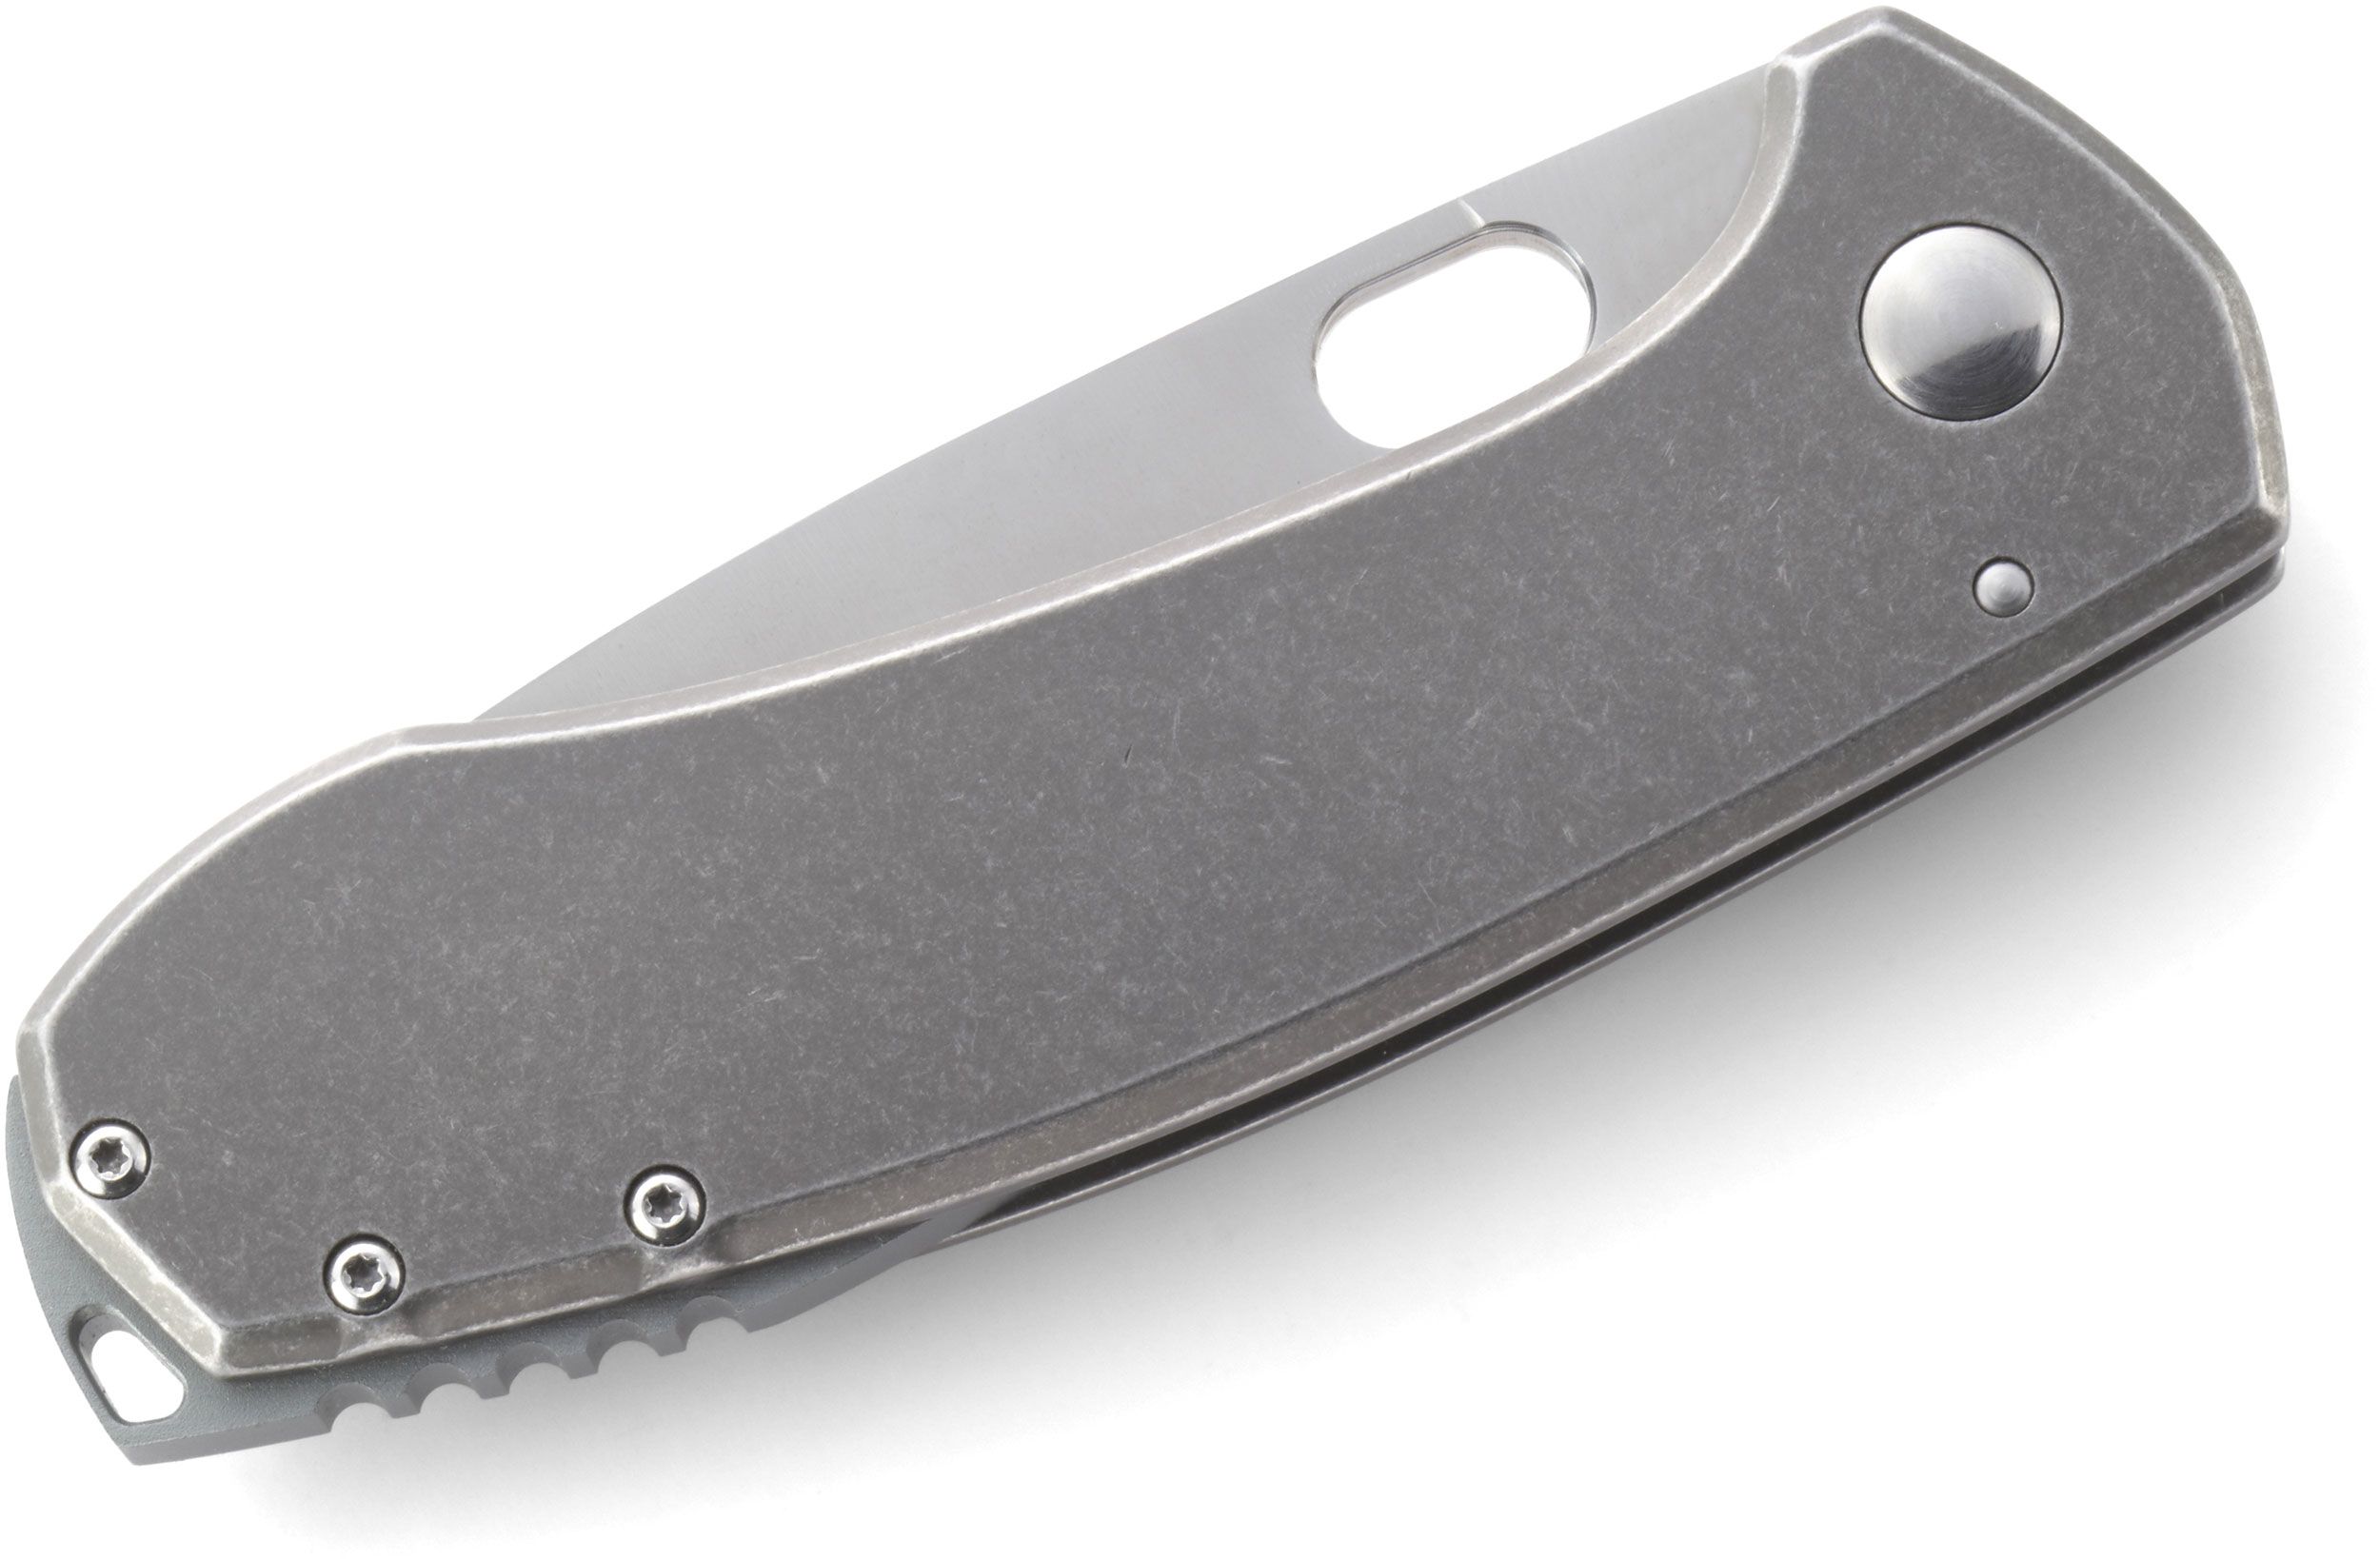 Work Sharp Promotion- Free $49.95 CRKT Amicus Folding Knife - Work